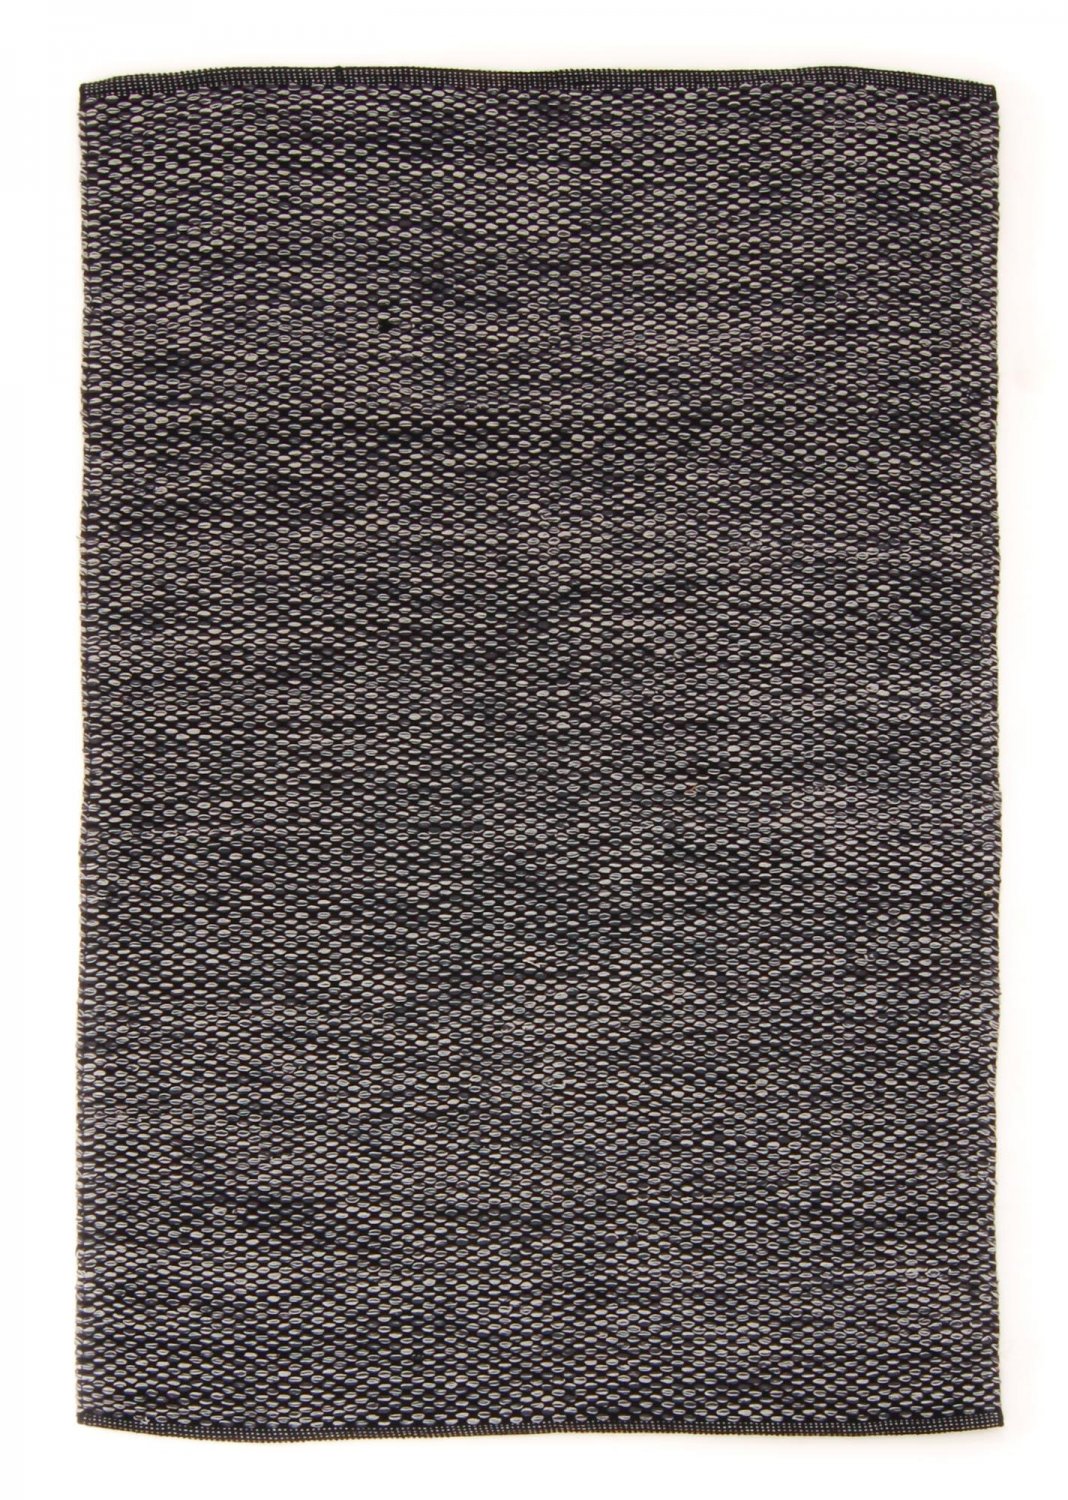 Tapis chiffons - Tuva (noir/gris)